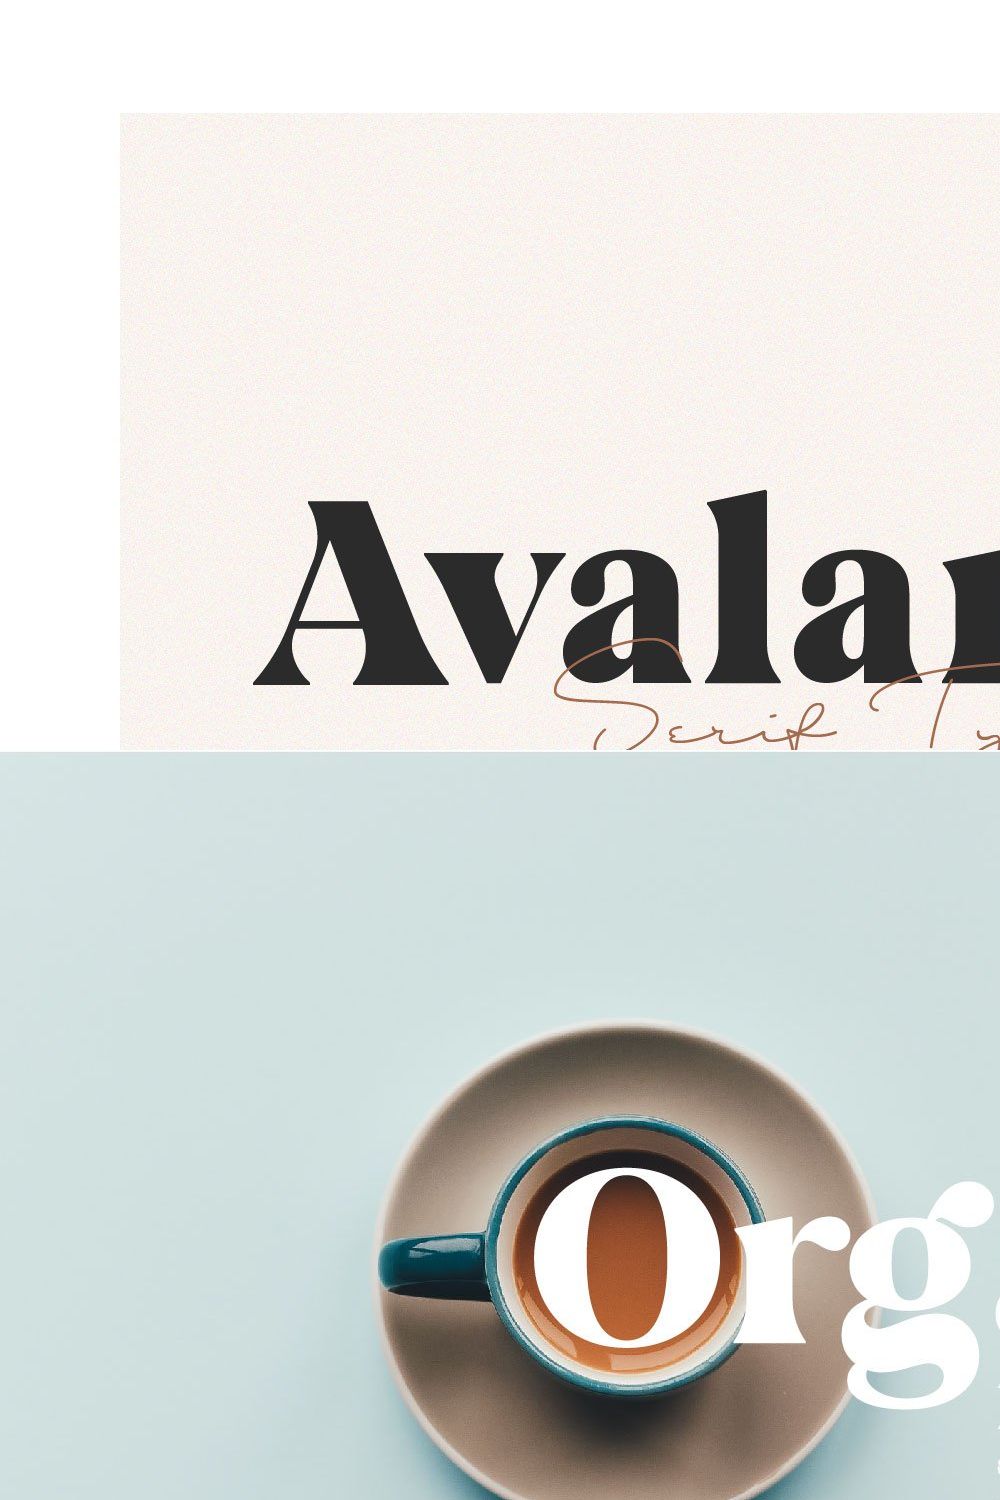 Avalanche - Serif Font pinterest preview image.